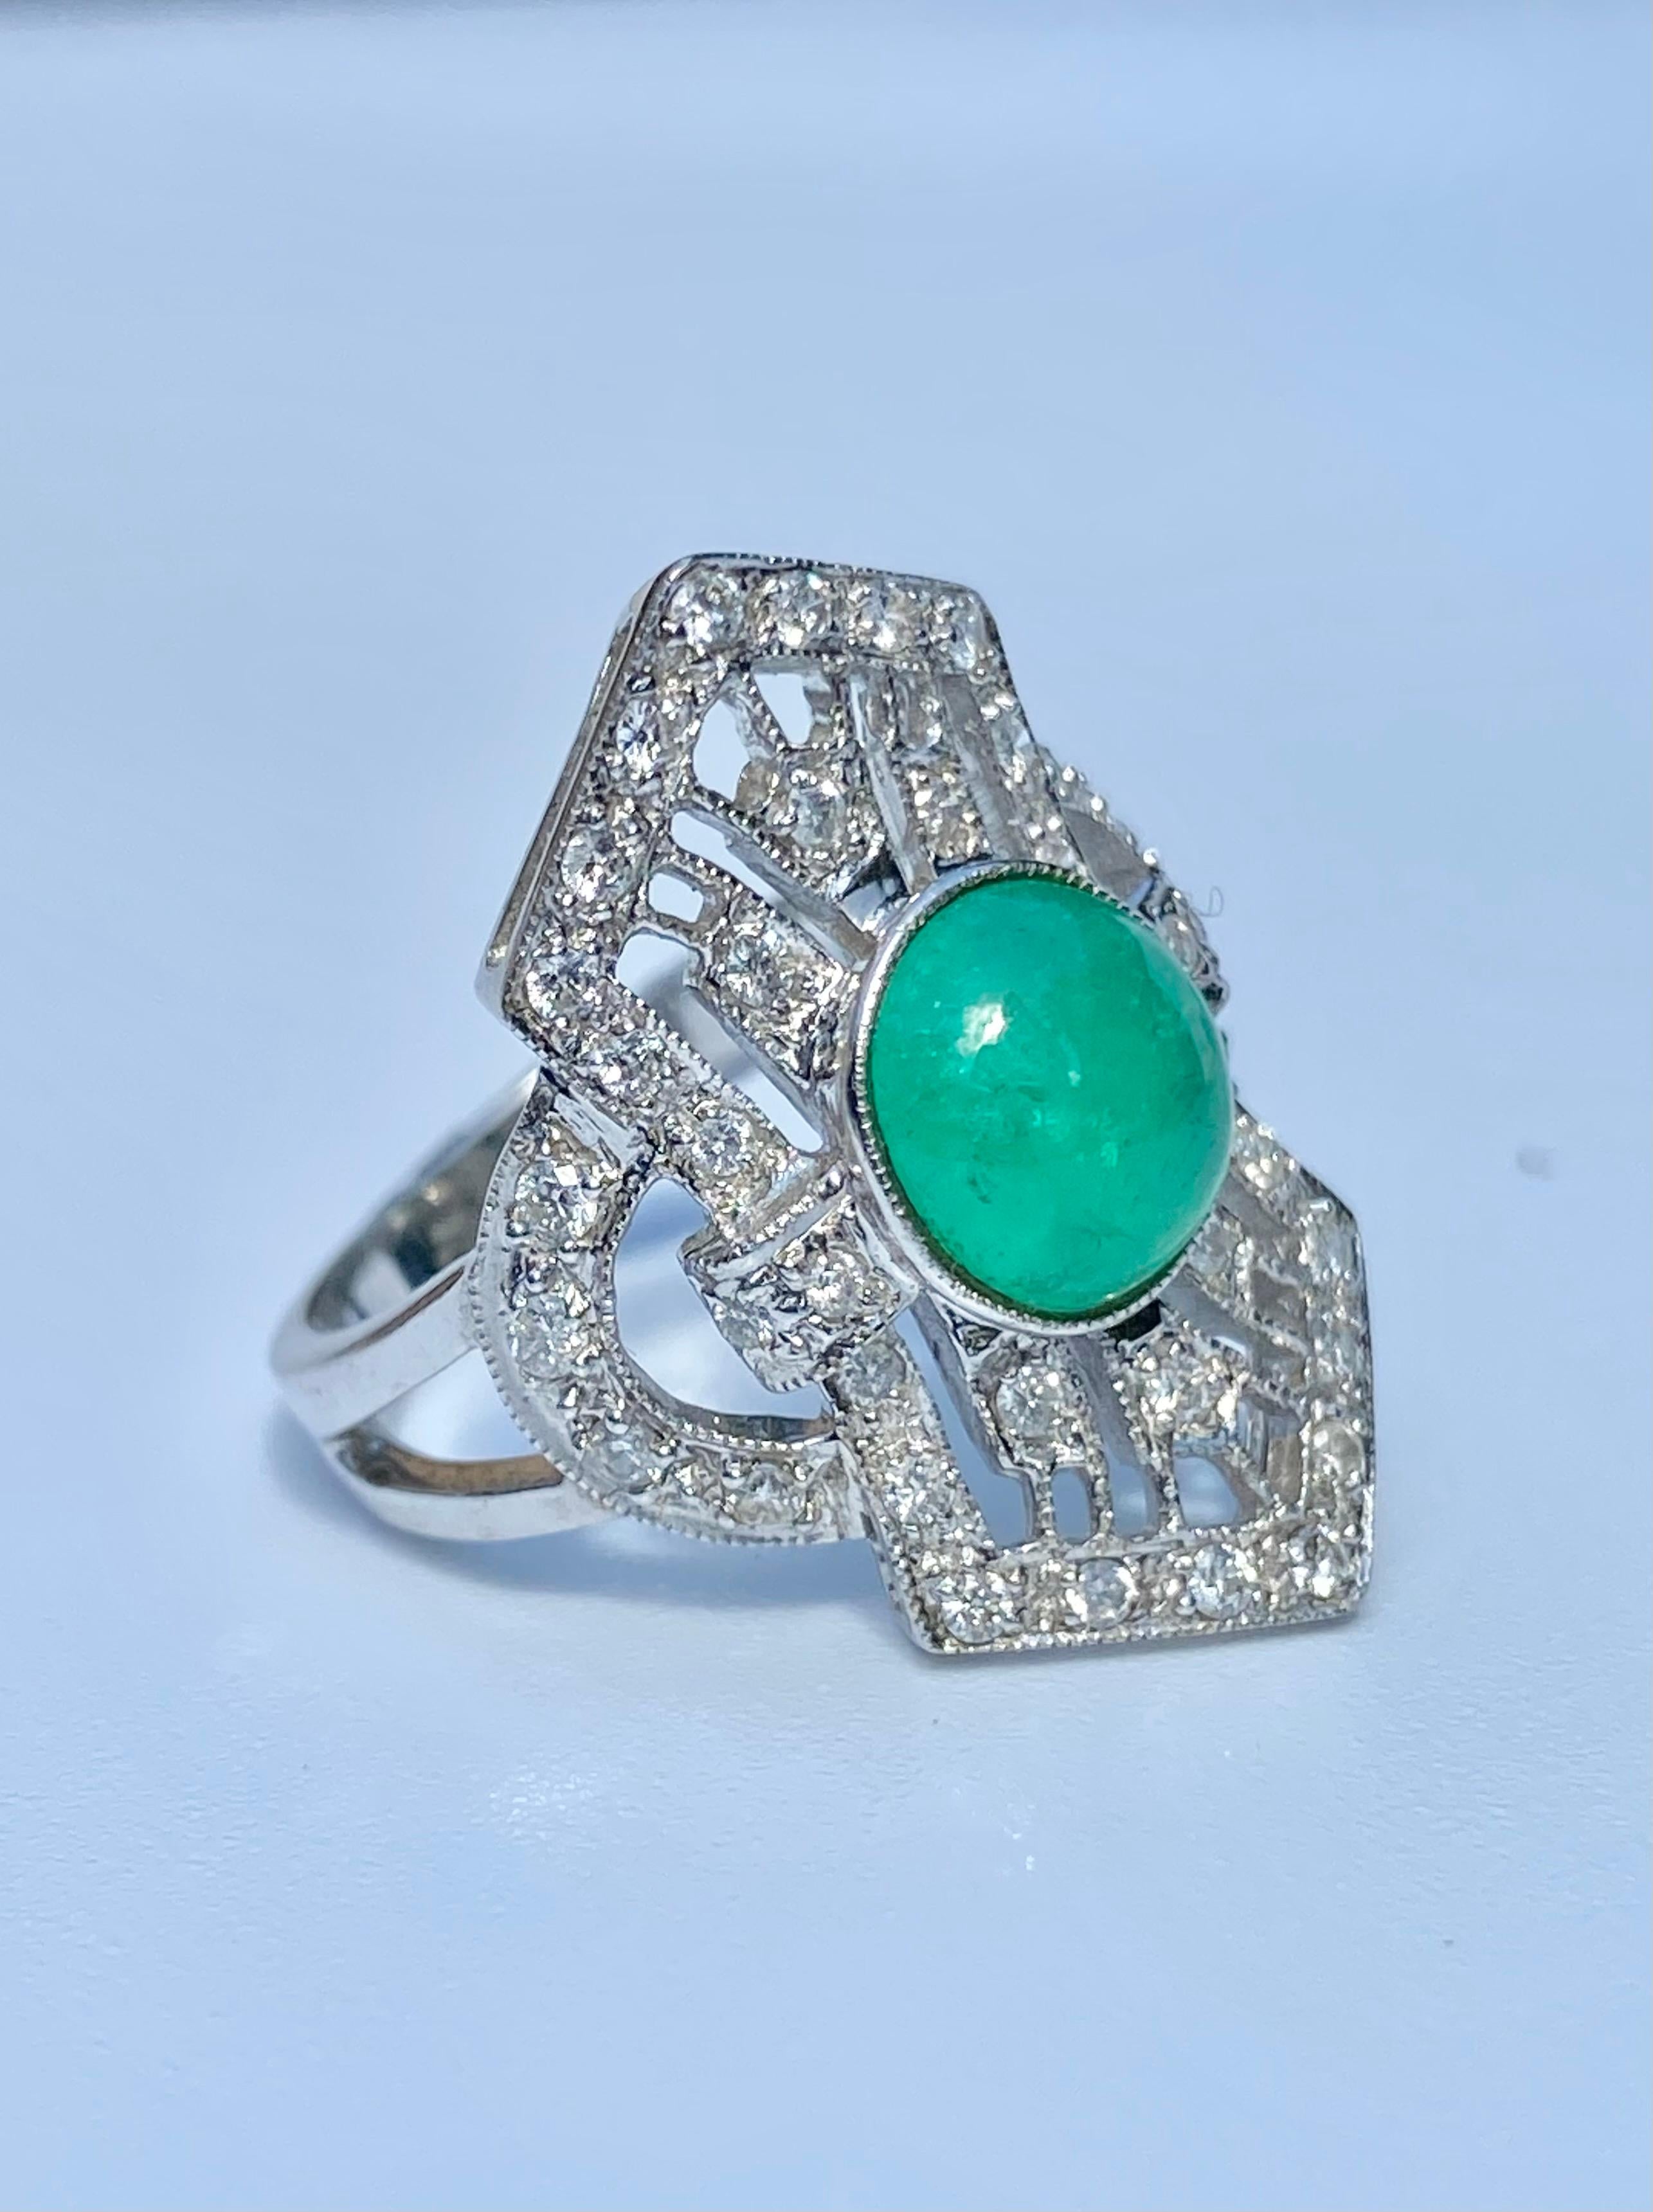 Emerald Cut 1.40 Carat Cabochon Cut Colombian Emerald, Diamond and 14 Karat White Gold Ring